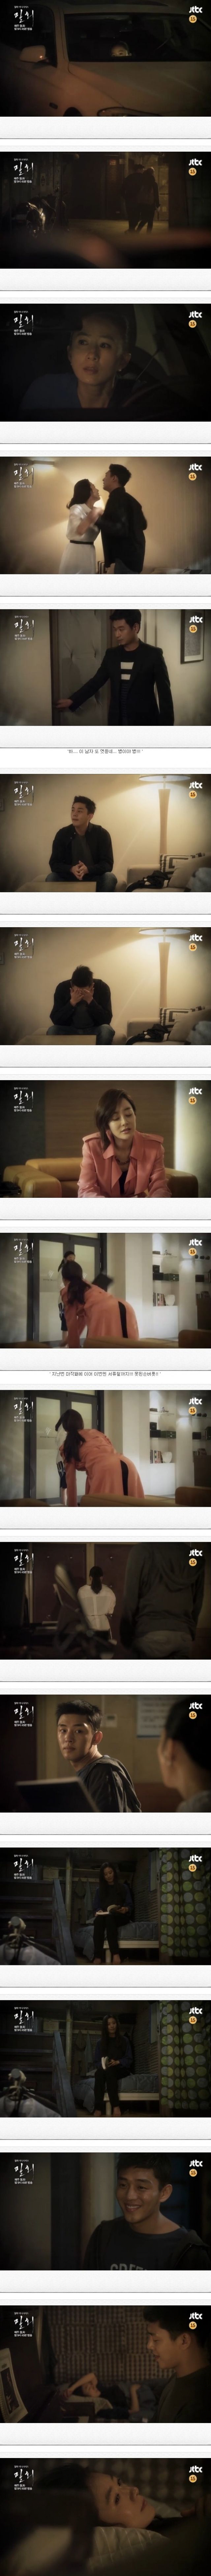 episode 8 captures for the Korean drama 'Secret Love Affair'